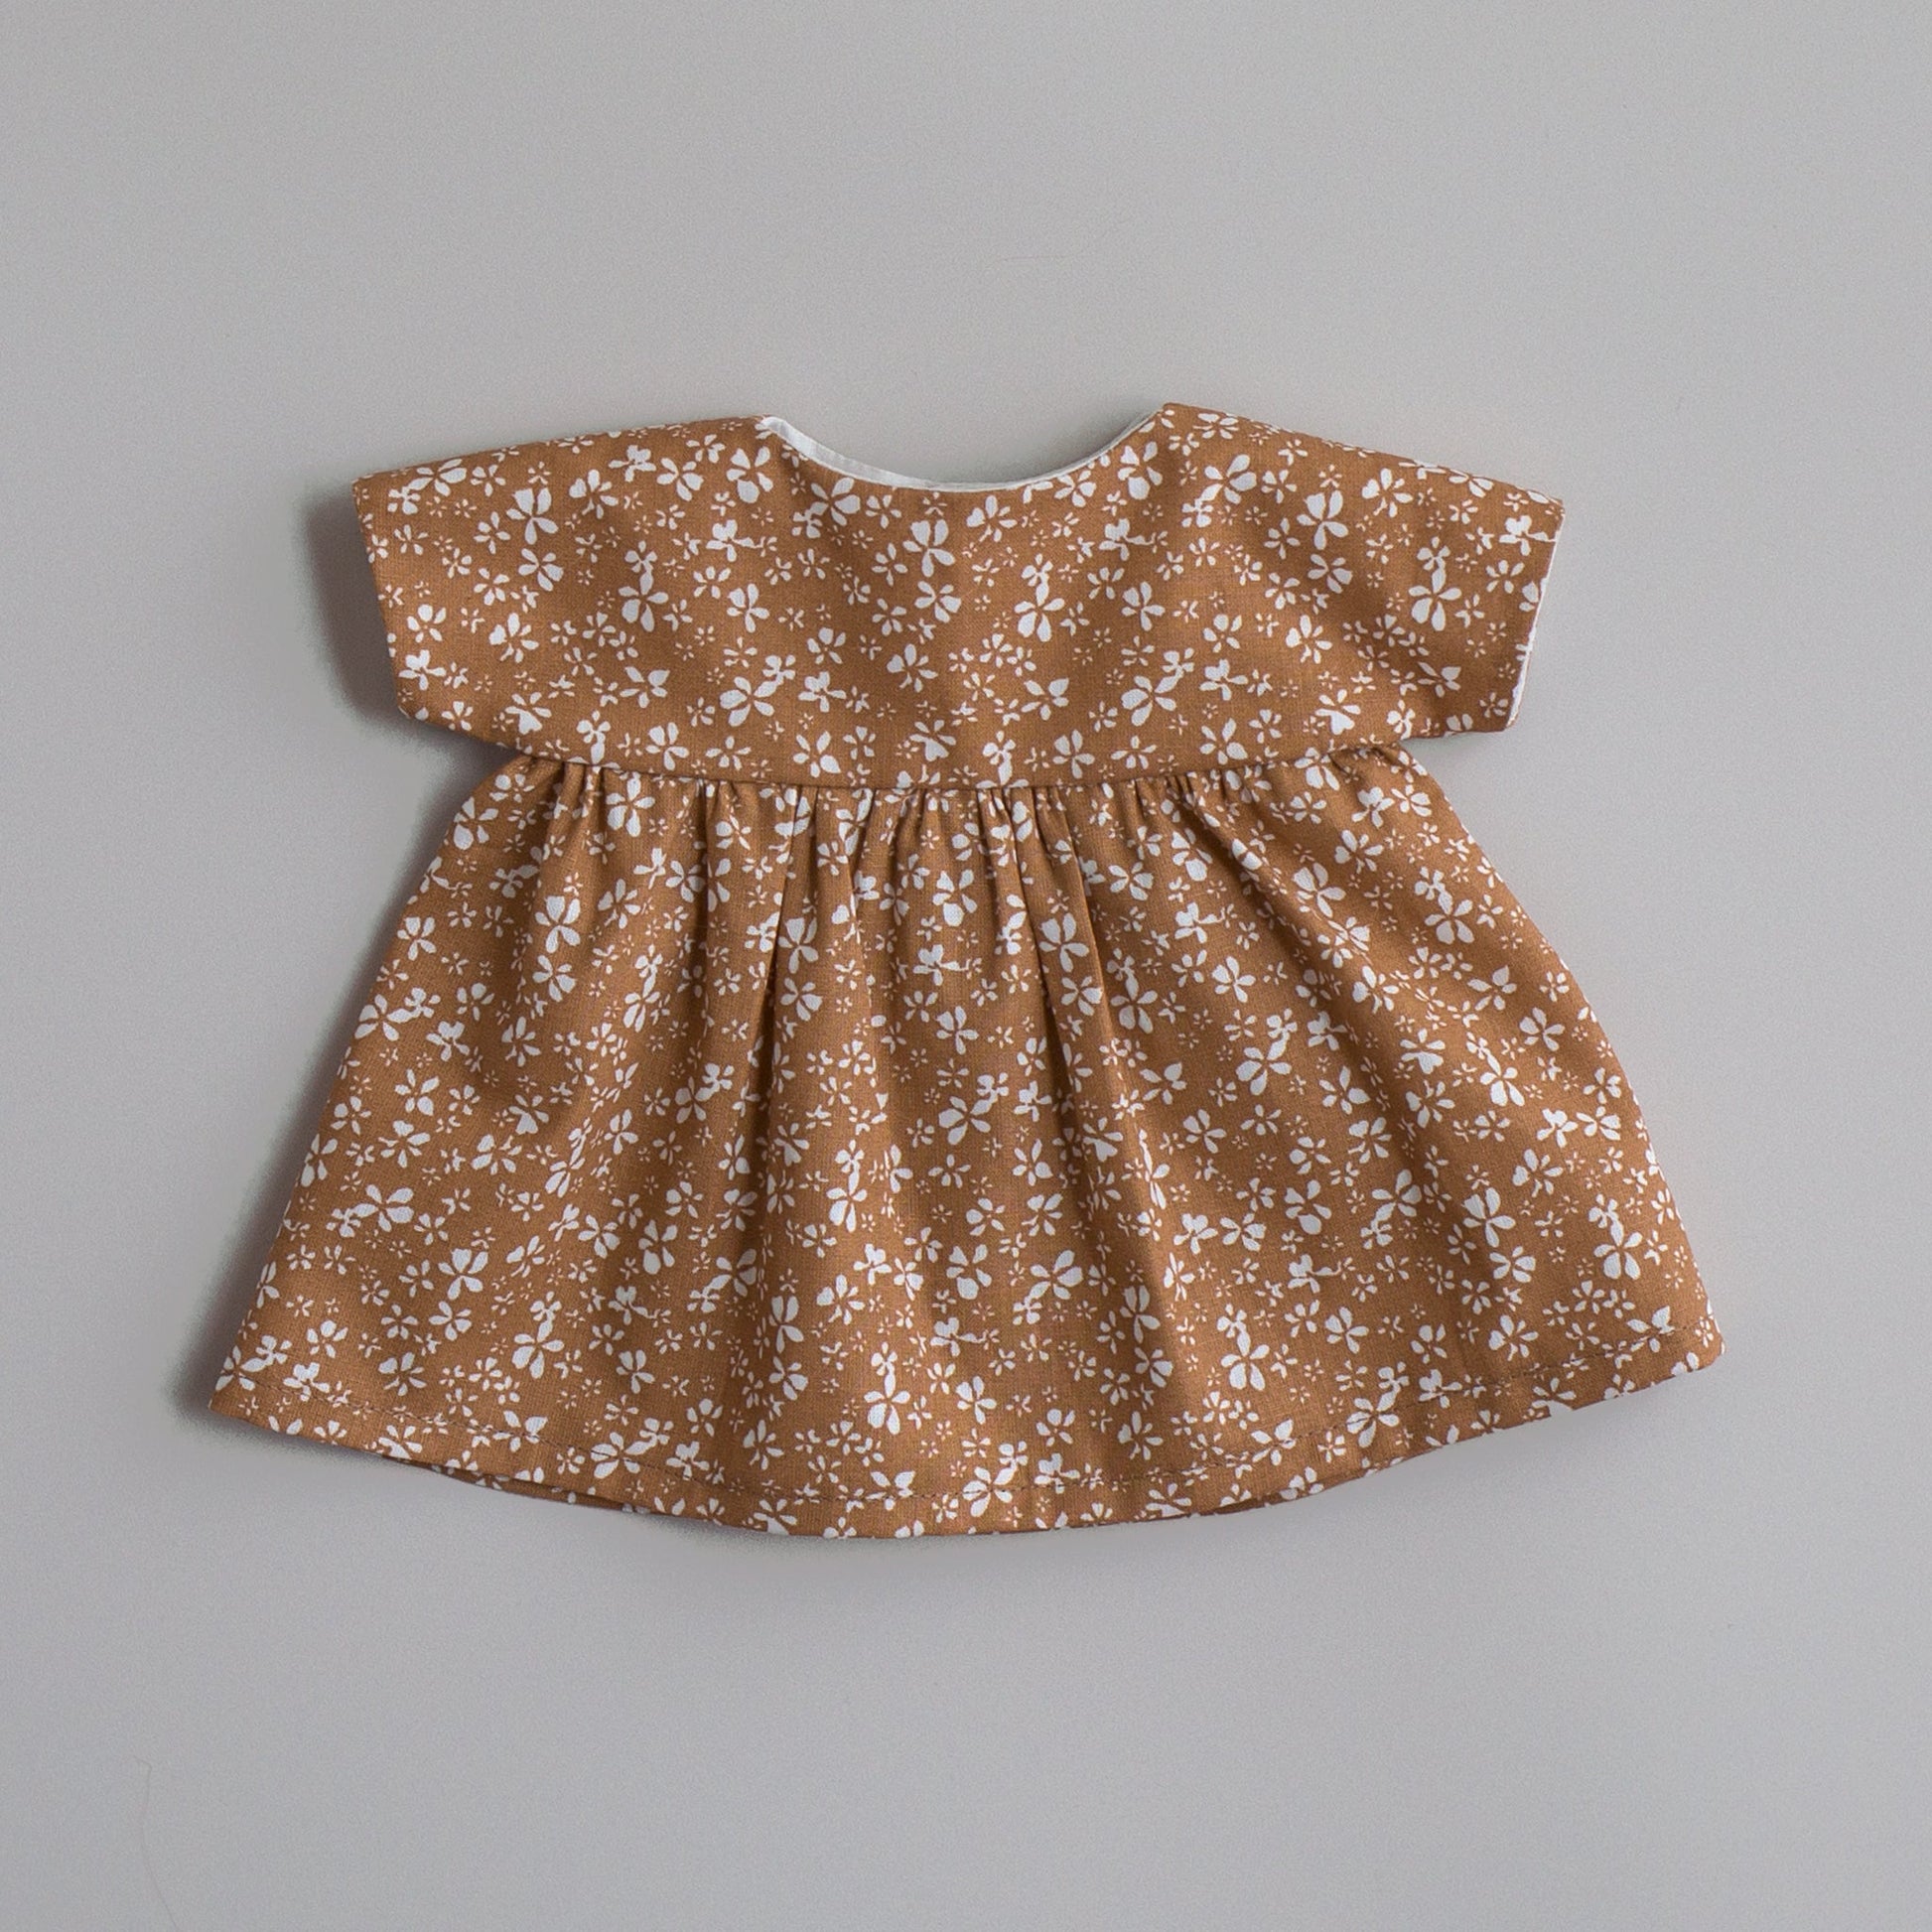 Daisy dress sewing pattern - Studio Seren